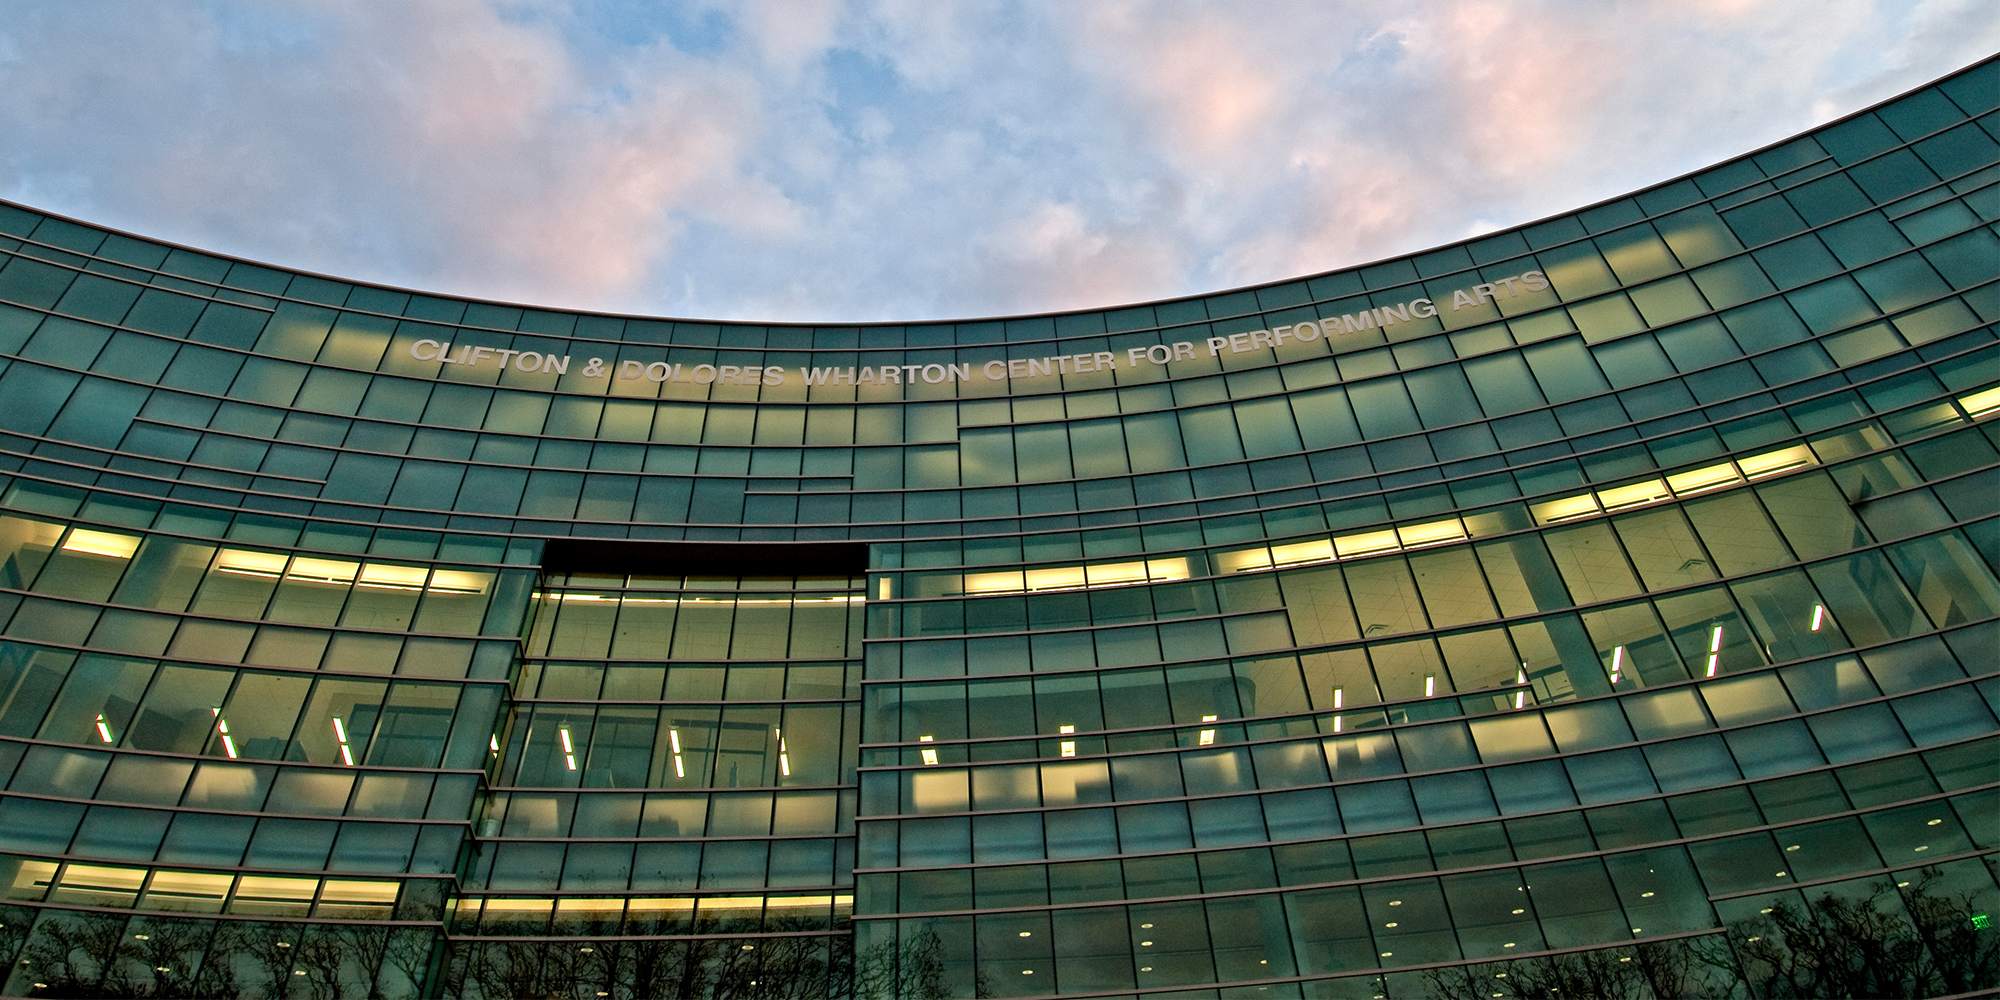 image of wharton center building